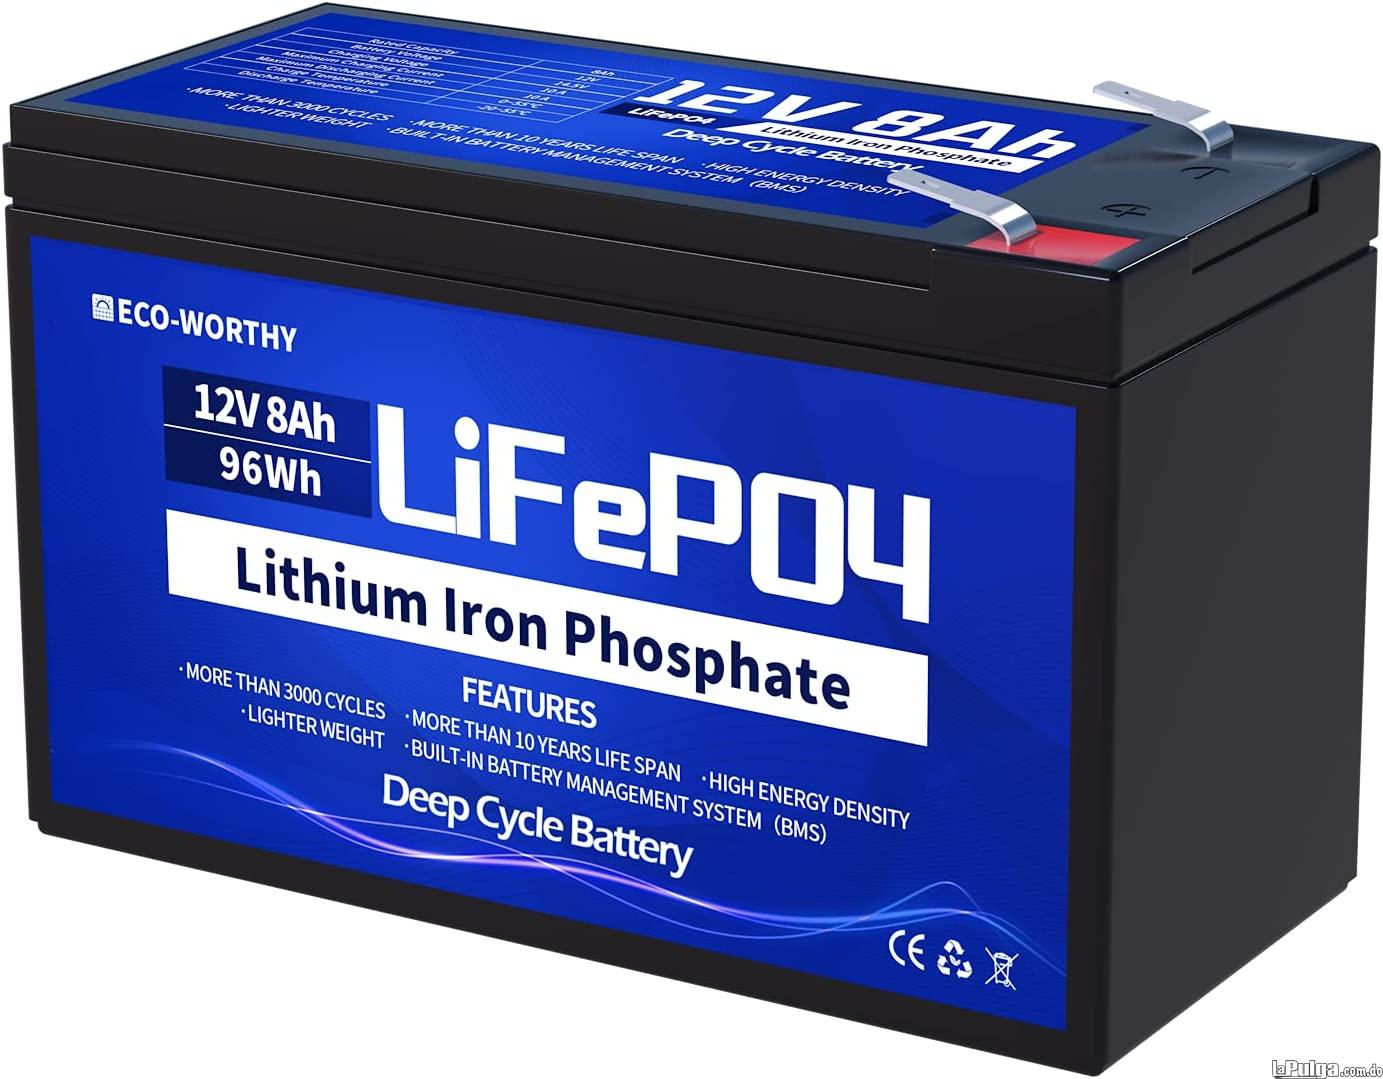    Baterias litio lithium para carros de golf   Foto 7148868-2.jpg